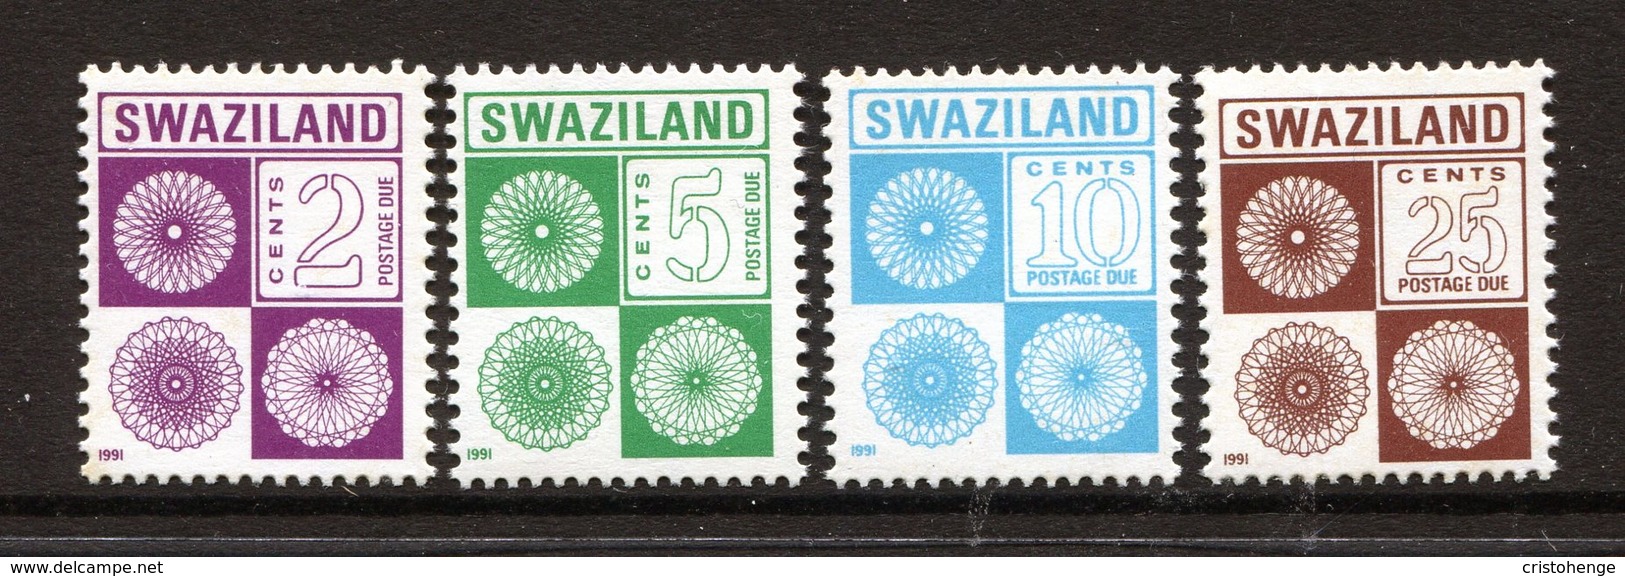 Swaziland 1991 Postage Dues Set MNH (SG D23-D26) - Swaziland (1968-...)